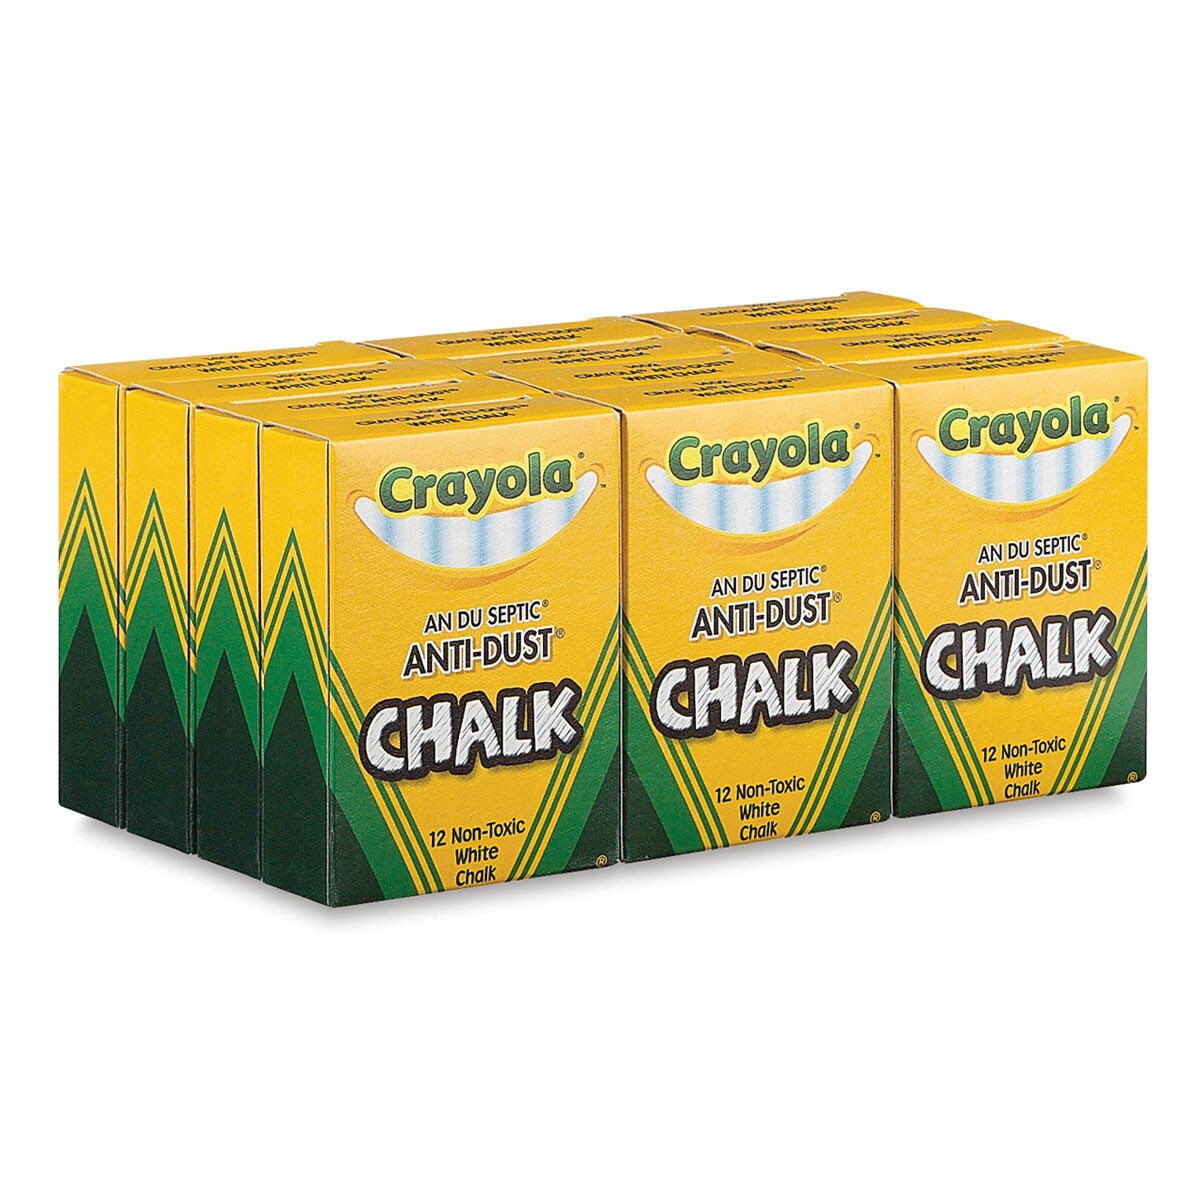 Crayola Anti-Dust Chalk - White, Pack of 144